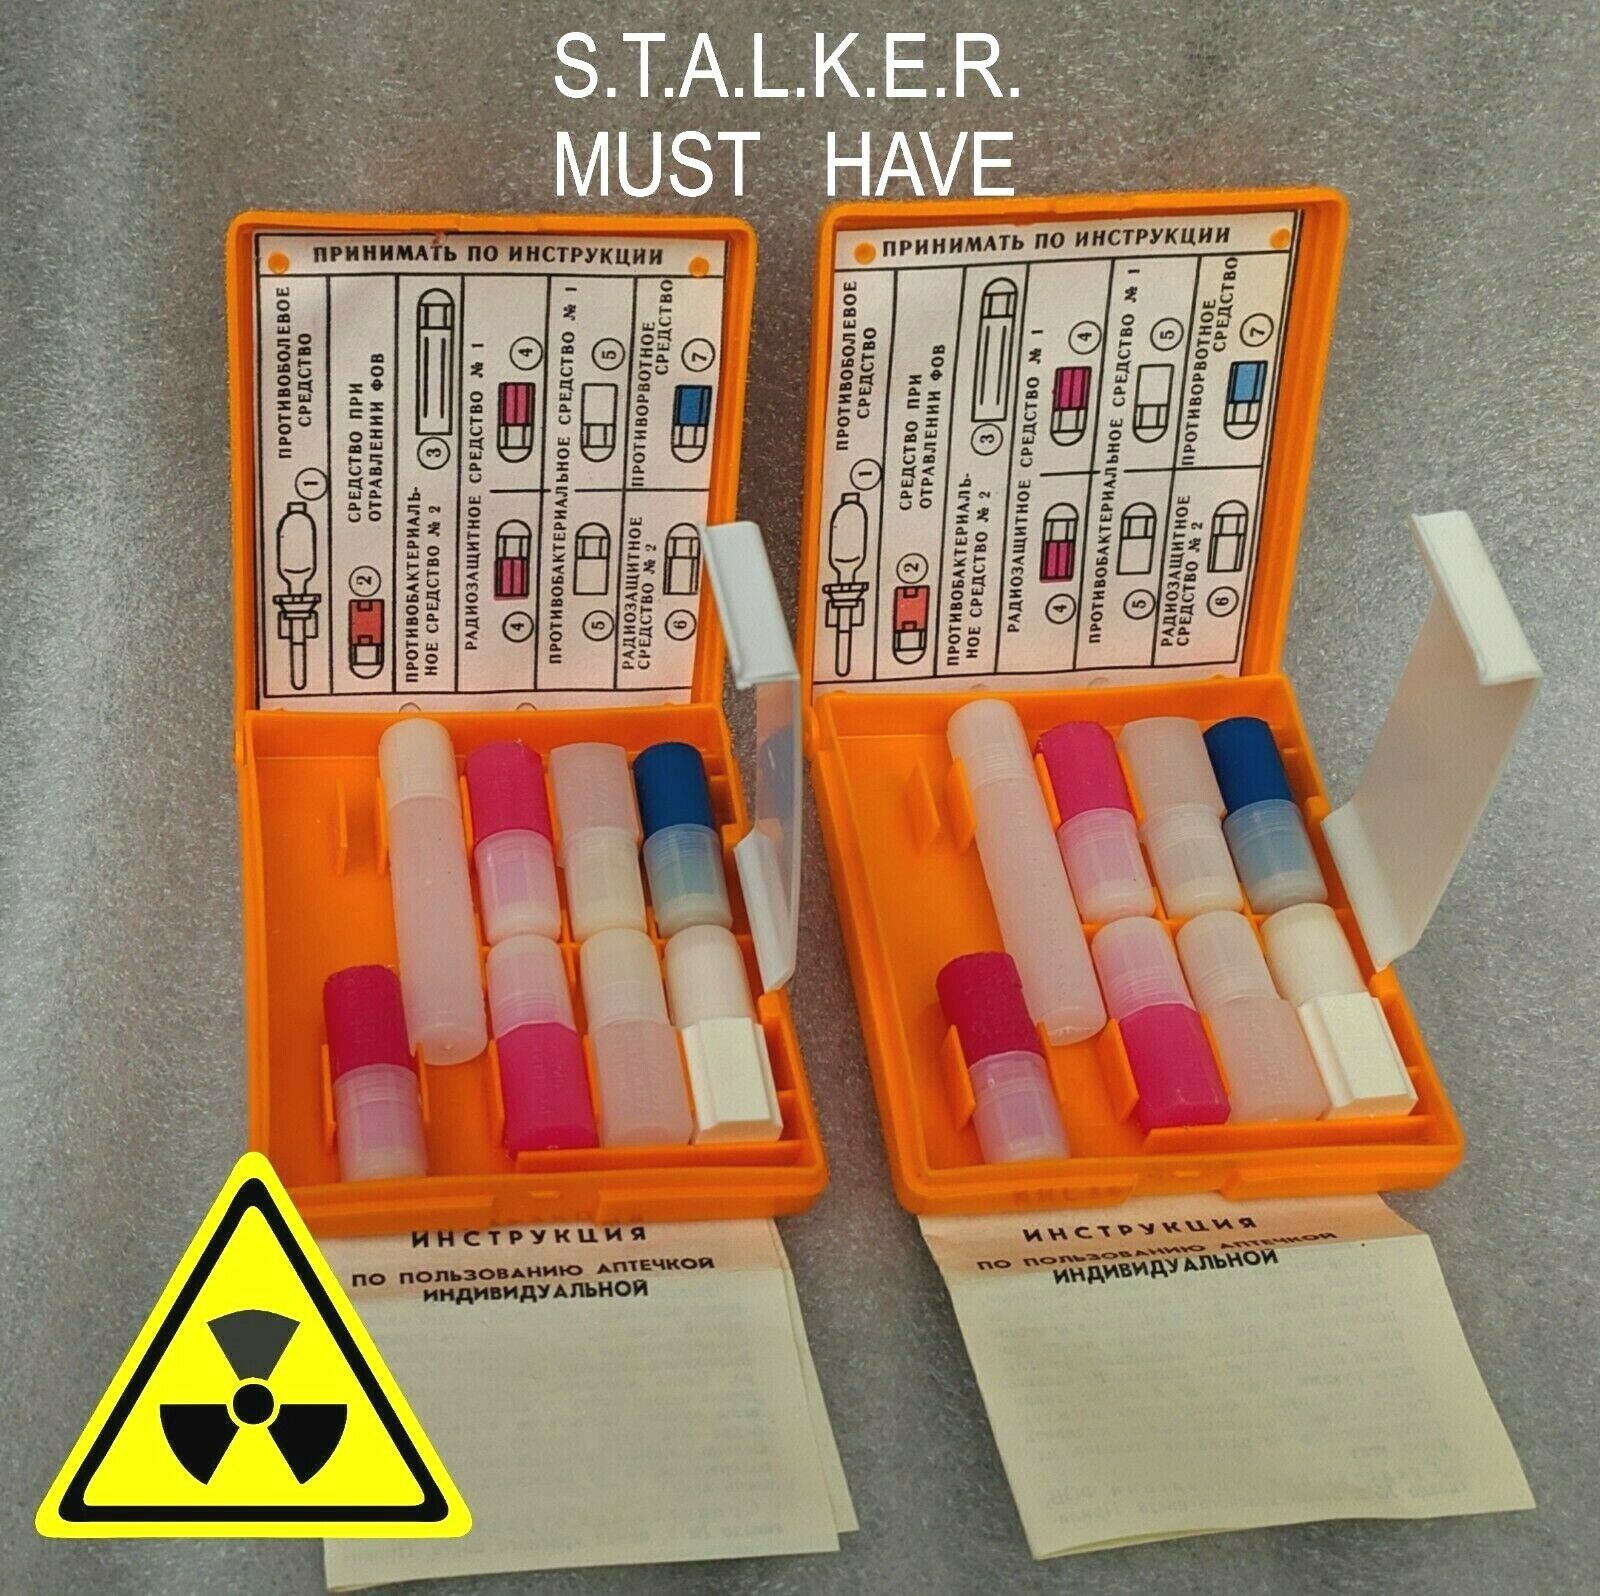 2 X Army Medic First Aid Kit Box Nbc Survival Chernobyl Ussr Stalker Tarkov